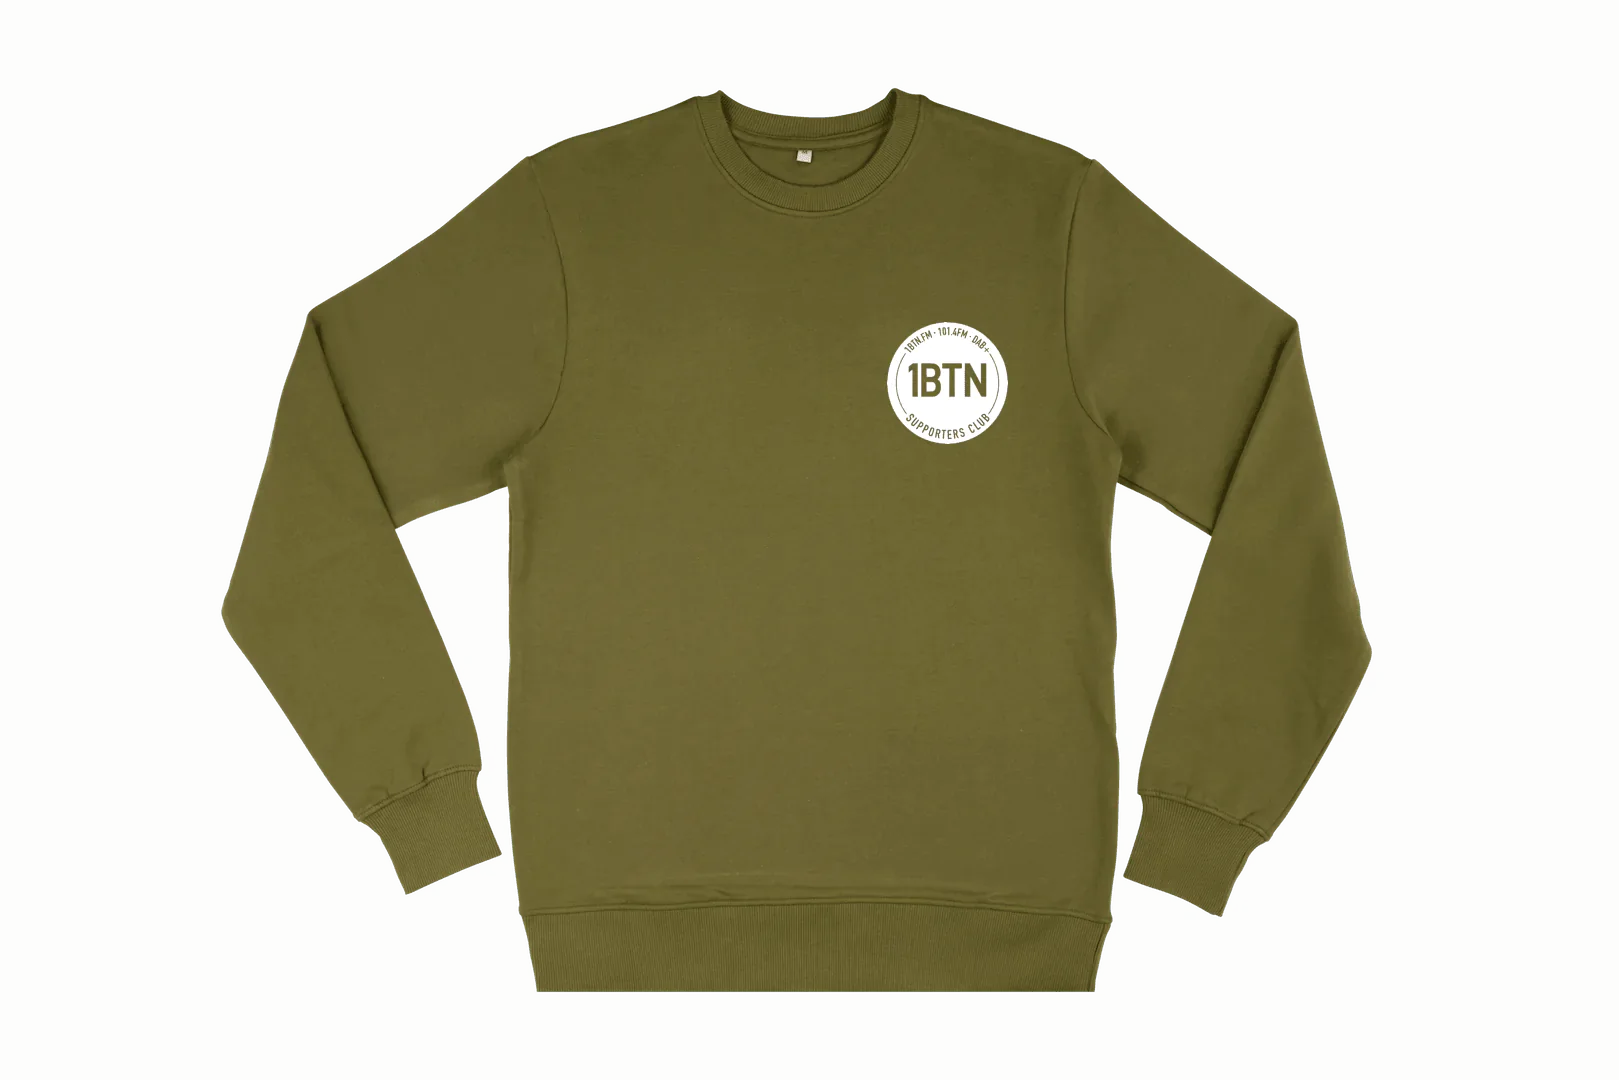 1BTN SUPPORTERS CLUB CHEST LOGO: Sweatshirt Official Merchandise of 1BTN.FM (5 Colour Options) - SOUND IS COLOUR